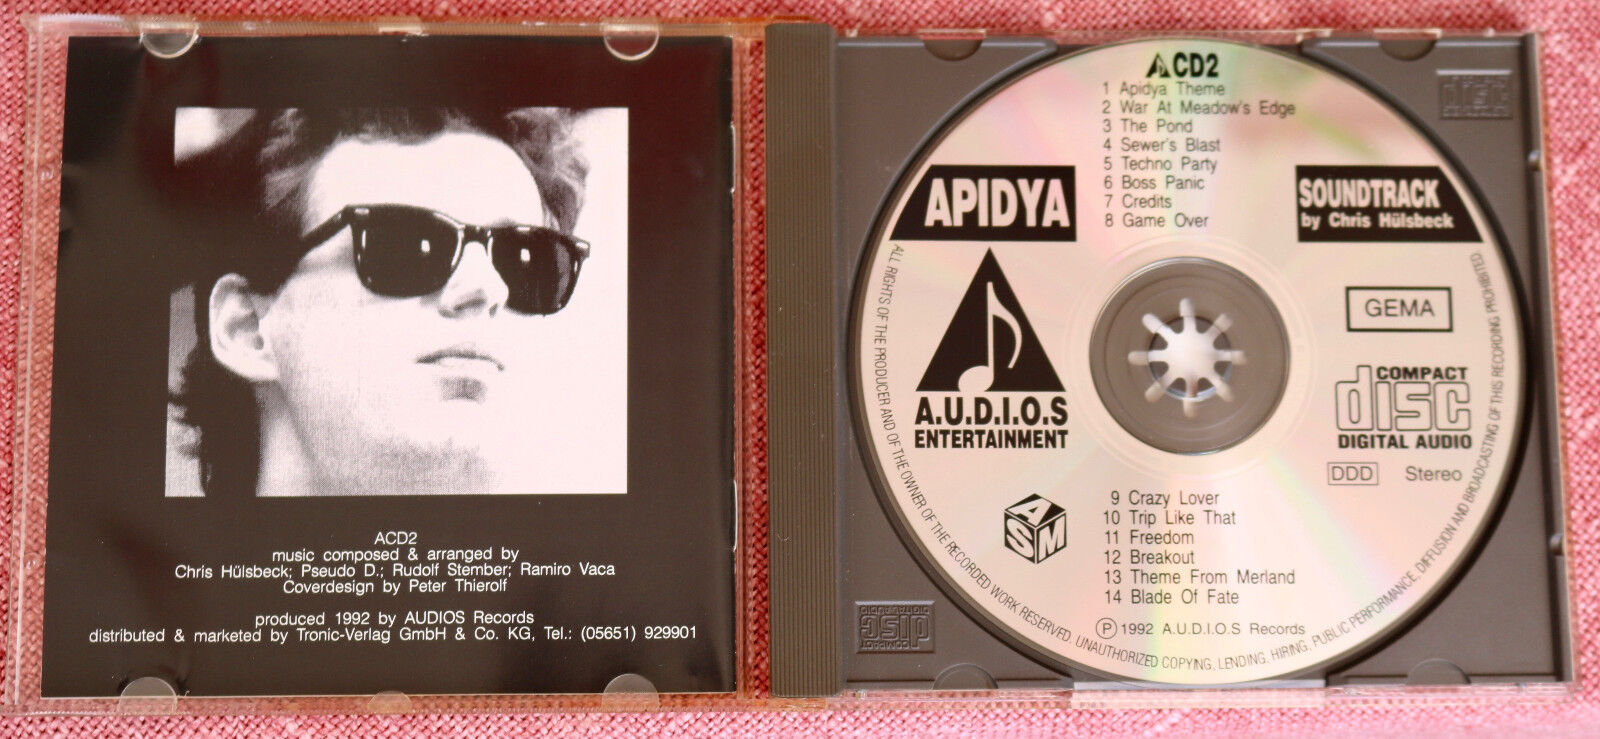 Apidya Original Soundtrack CD - ROM 1992 By Chris Hülsbeck,C64,Amiga,Commodore